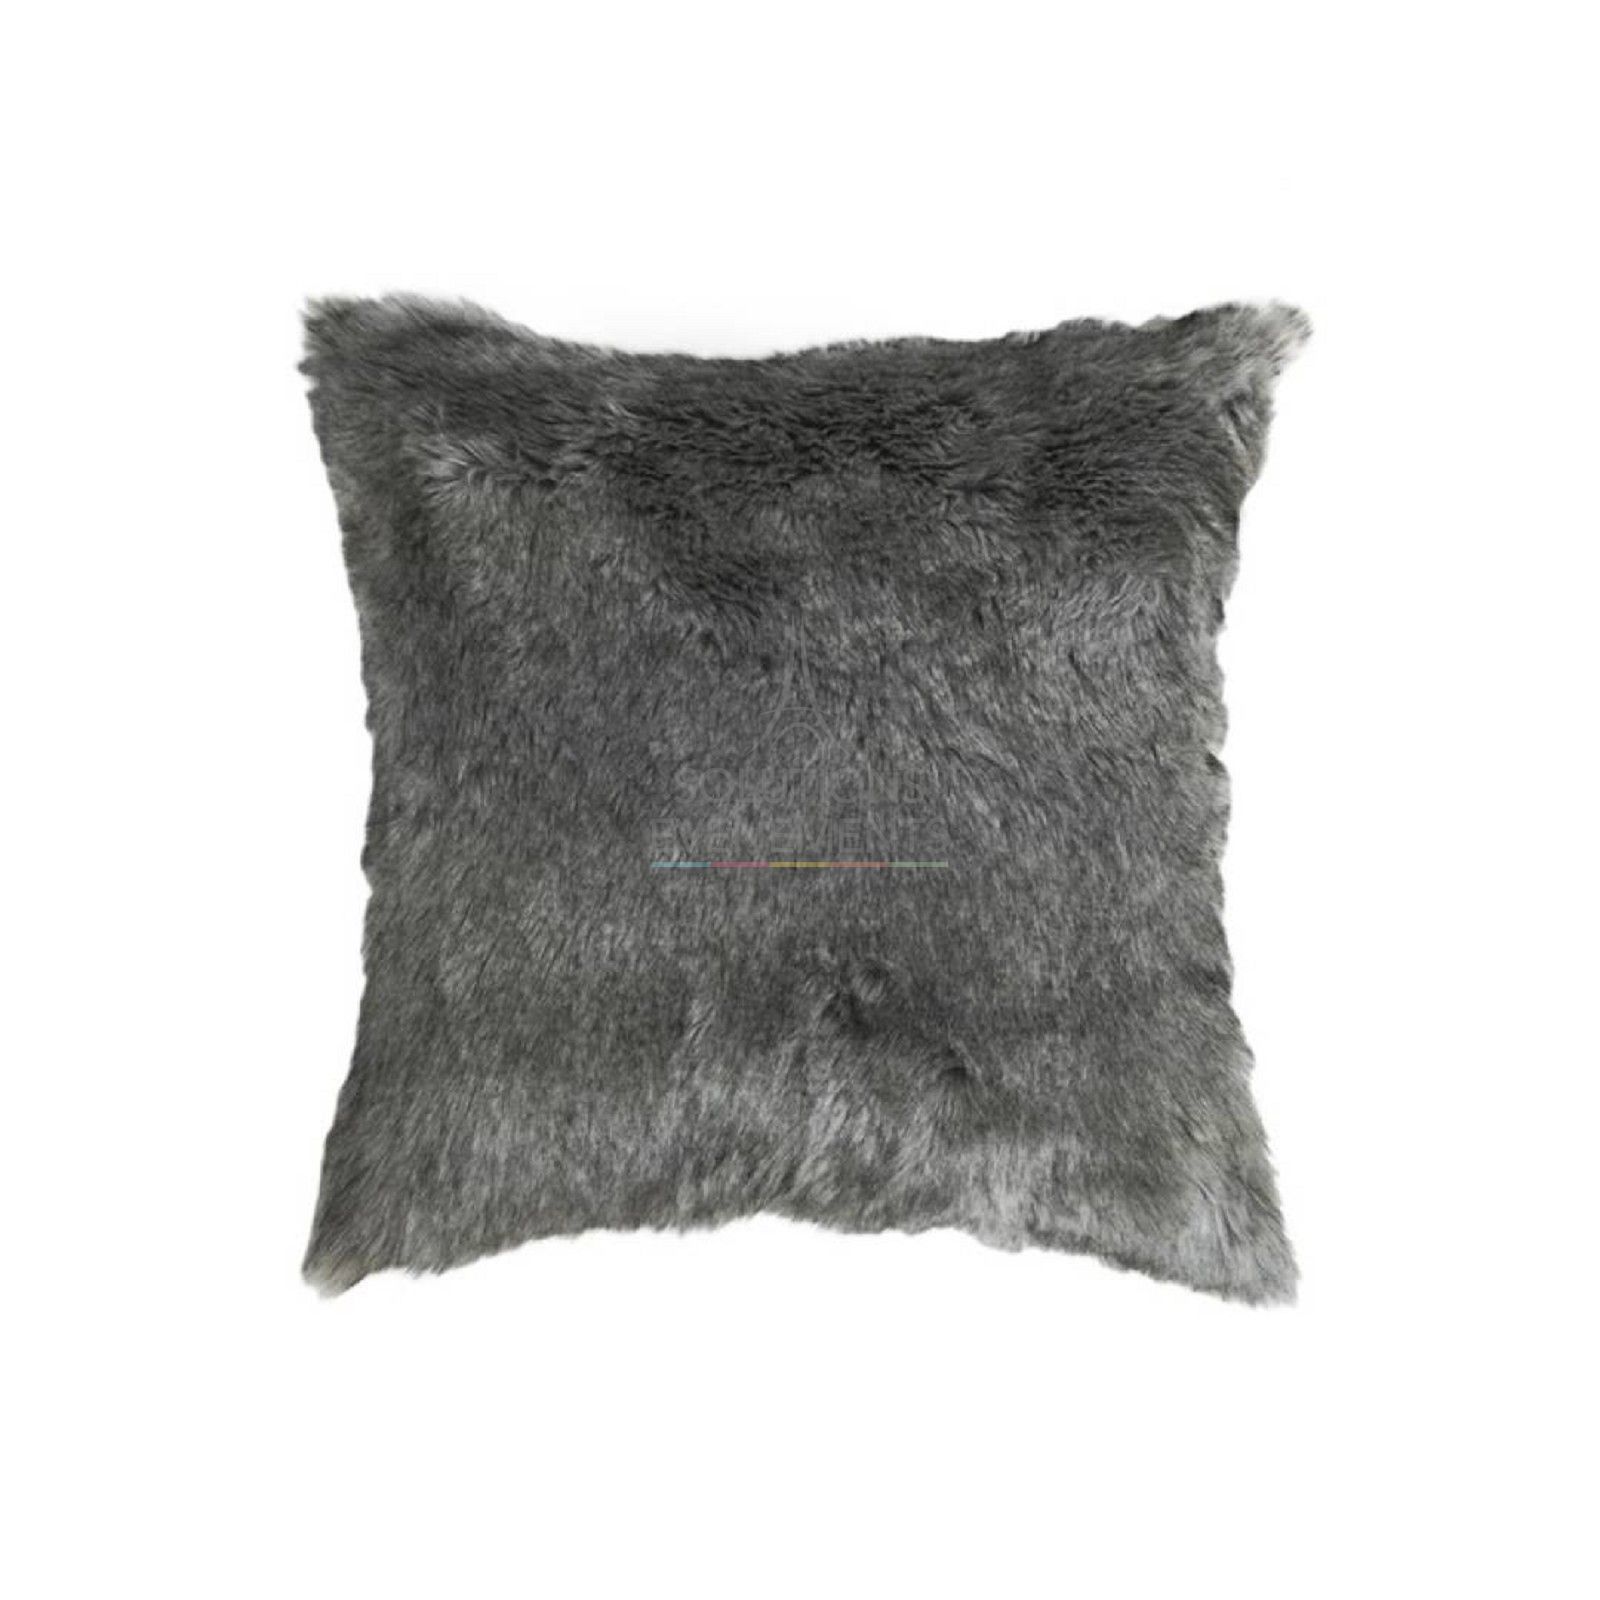 Nordic cushion rental